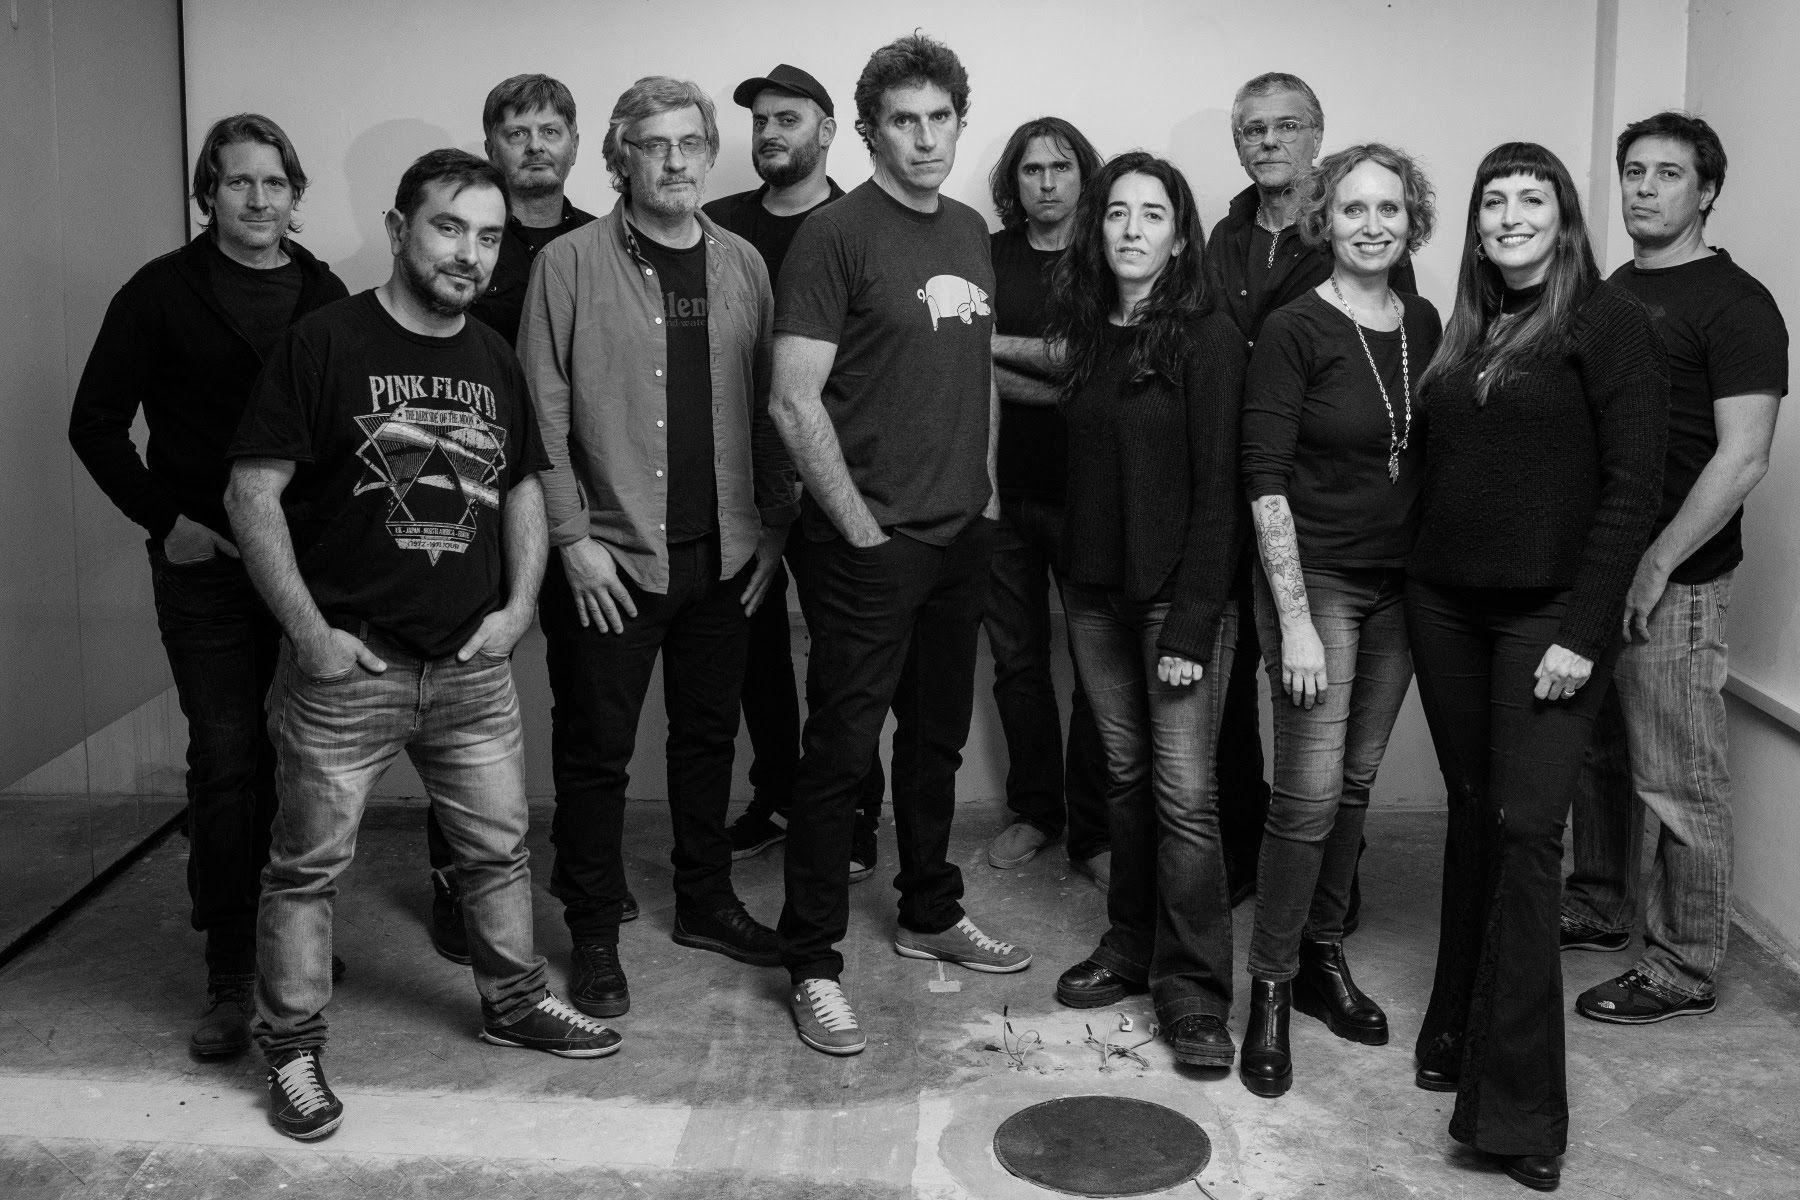 The End banda argentina que celebra sus treinta antildeos homenajeando a Pink Floyd